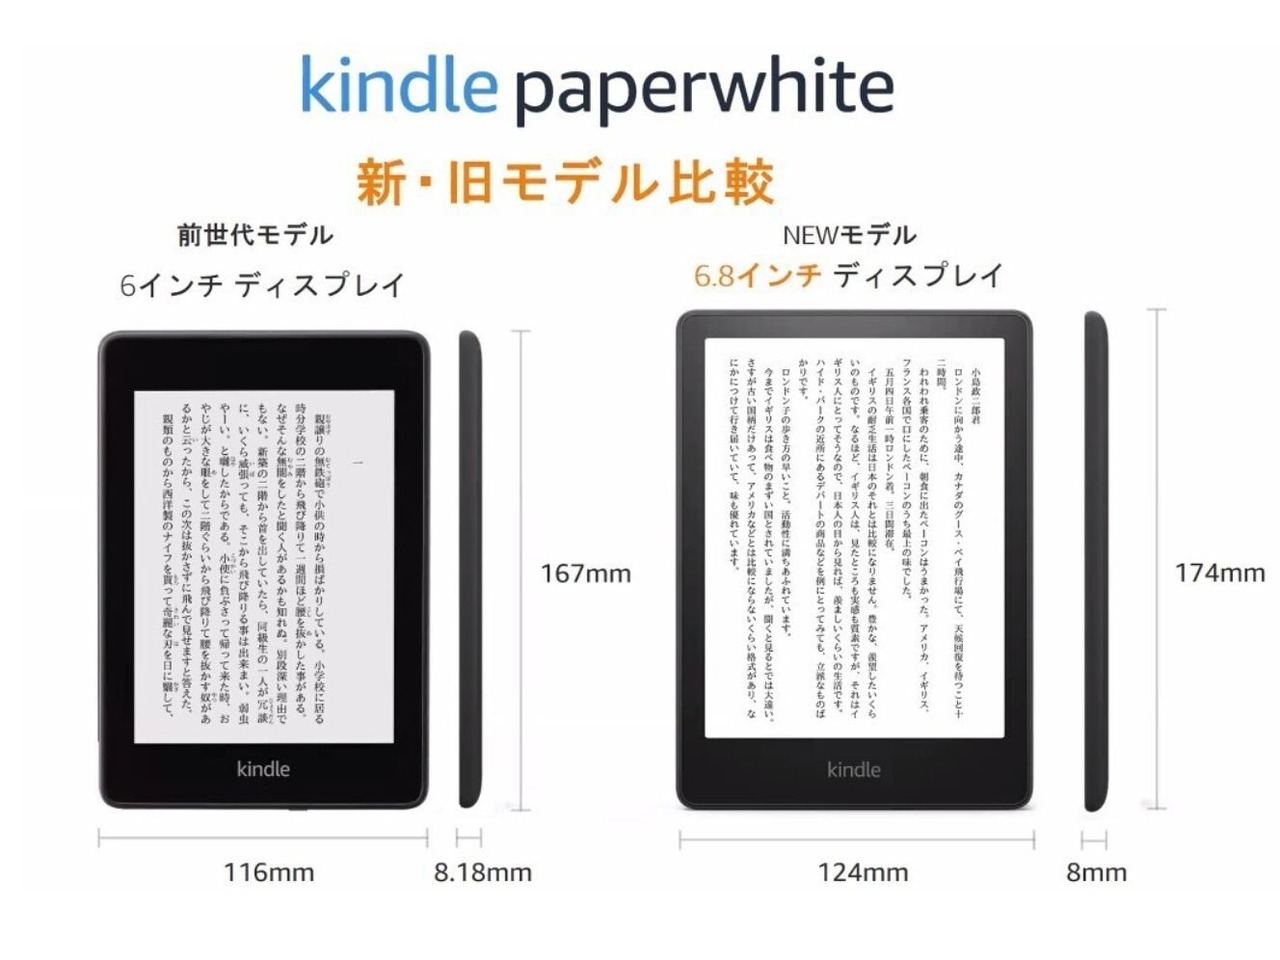 NEWモデル Kindle Paperwhite シグニチャー エディション